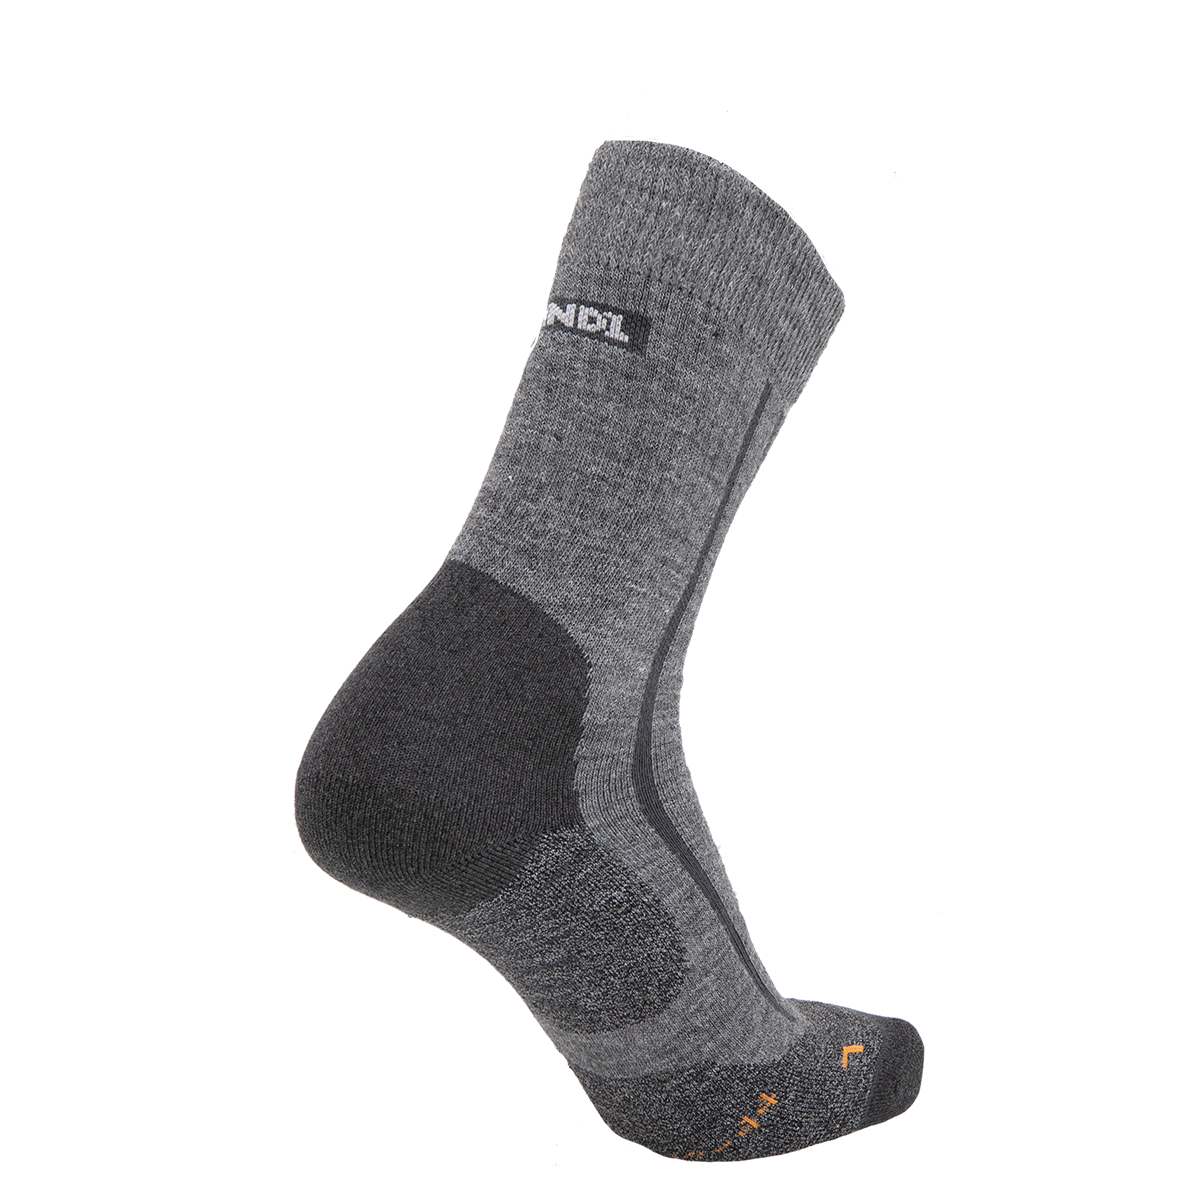 Smartwool Socks